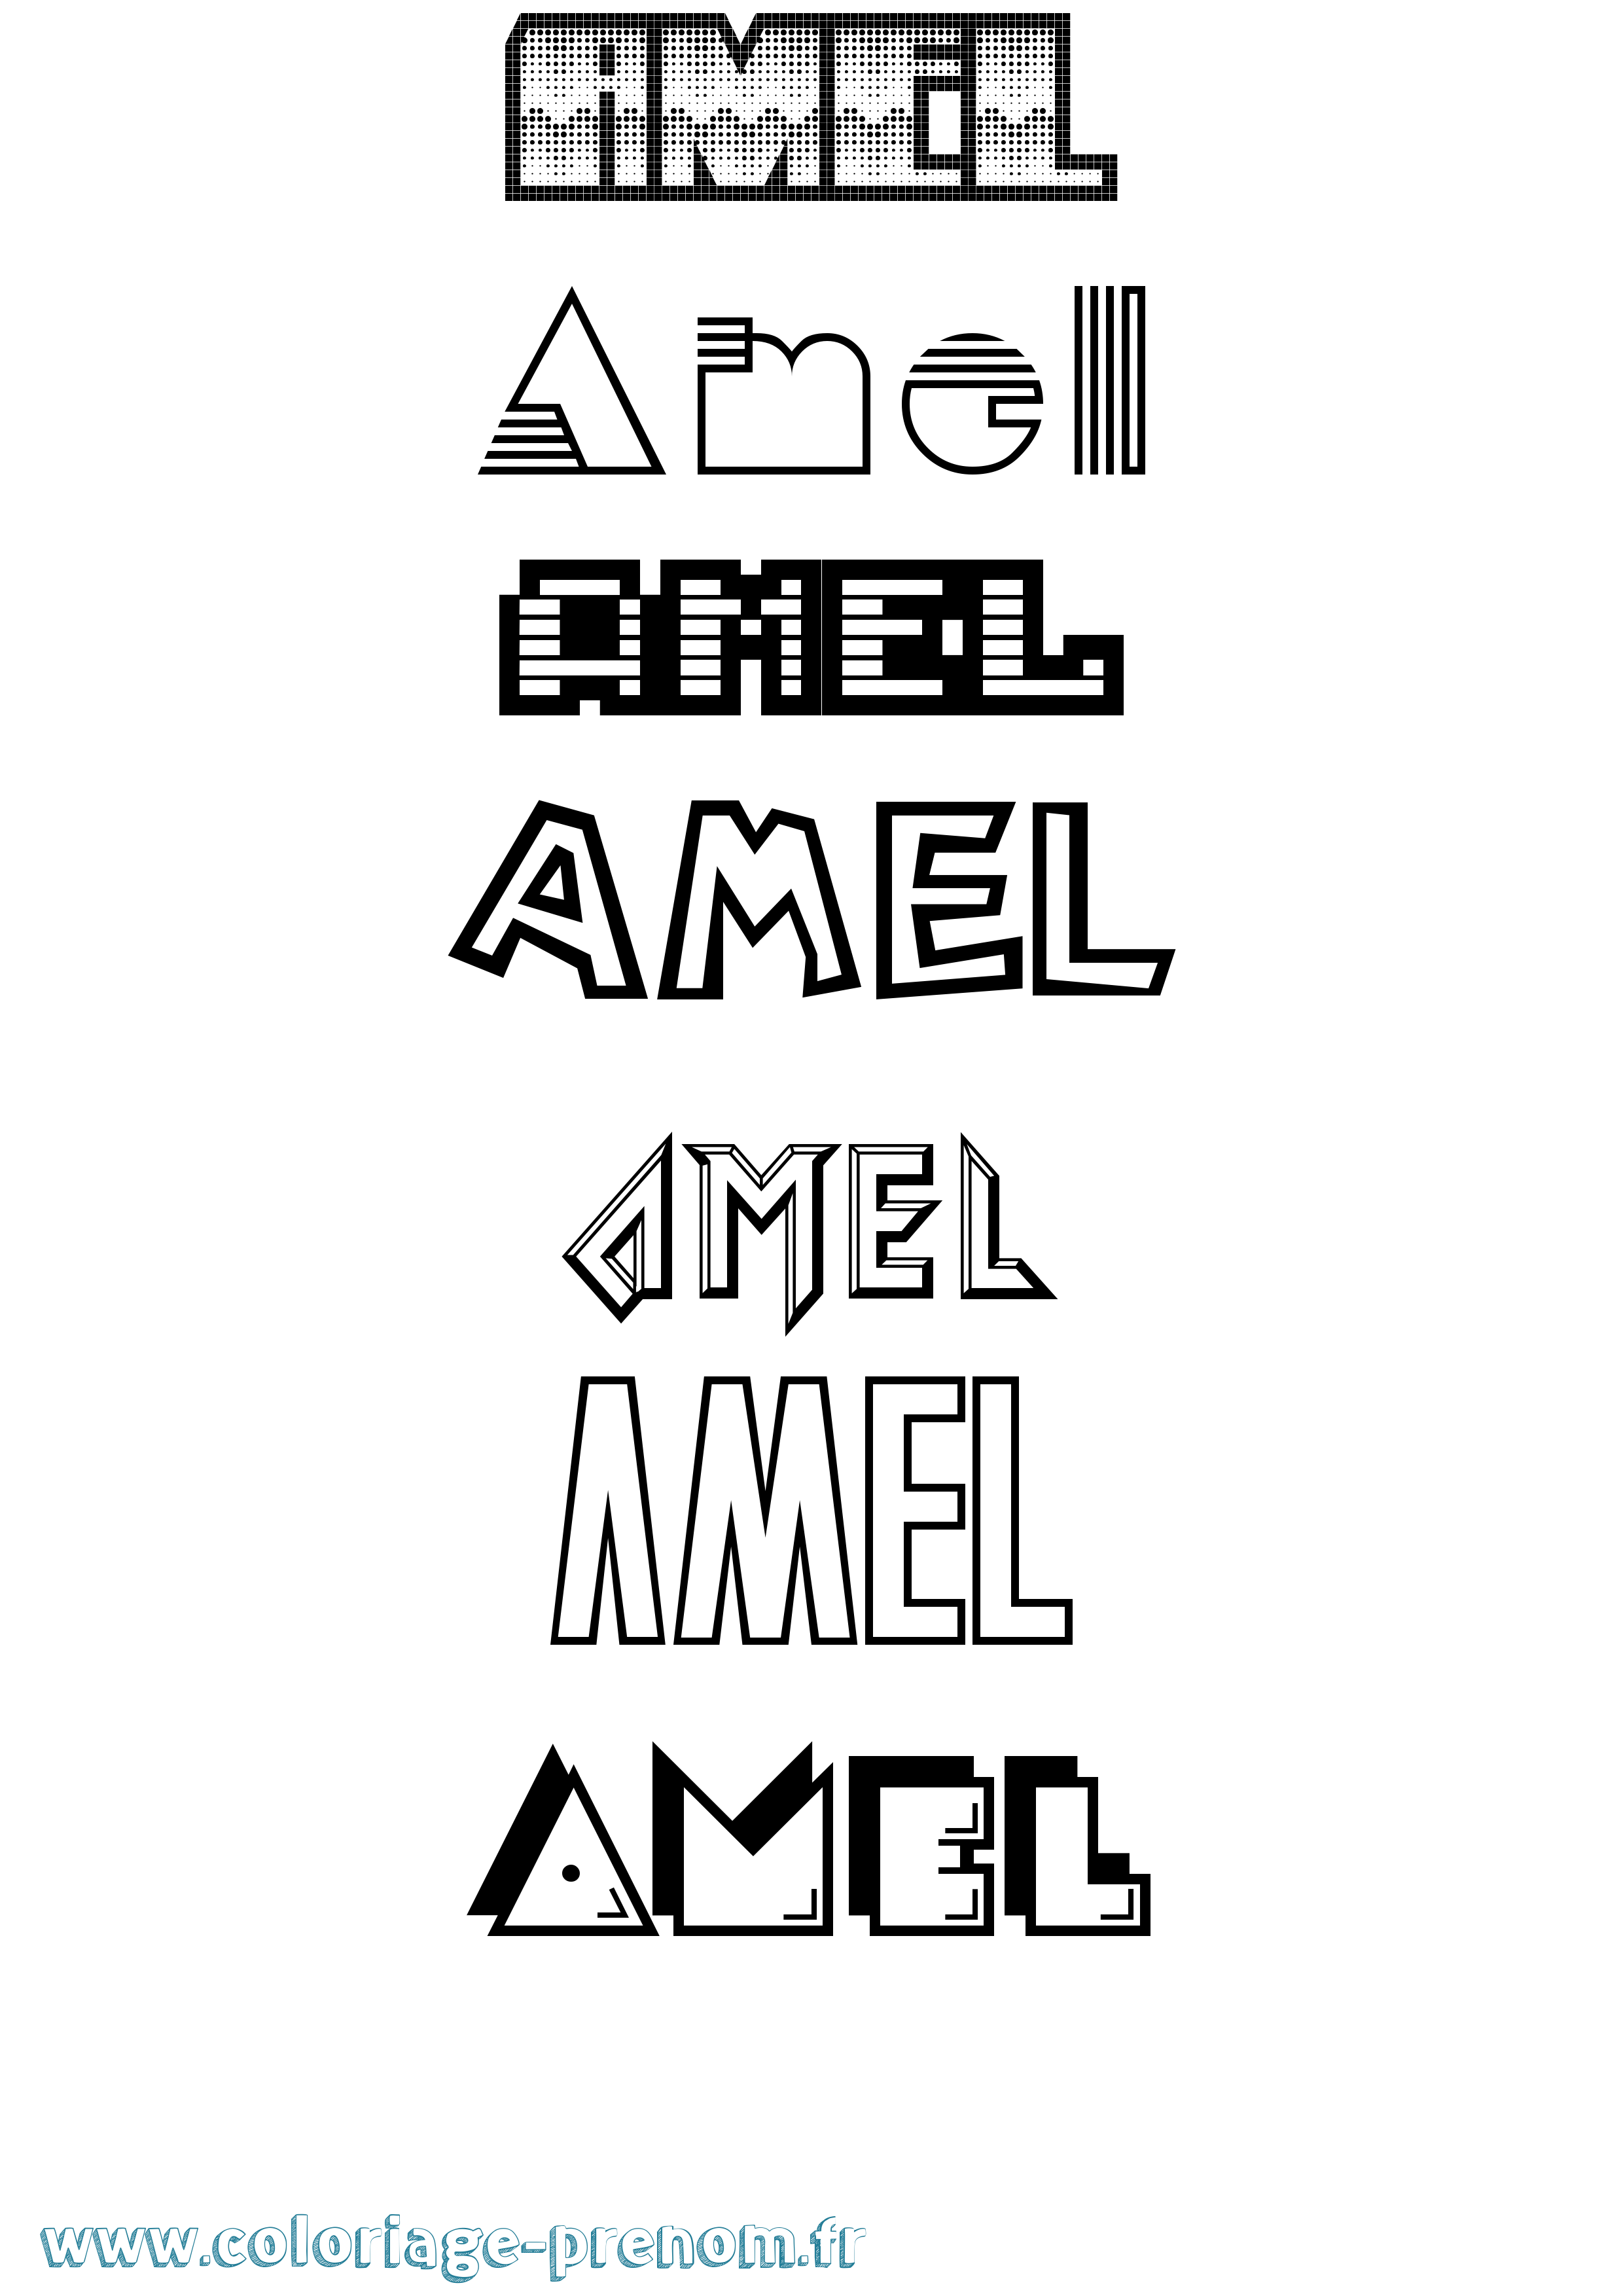 Coloriage prénom Amel